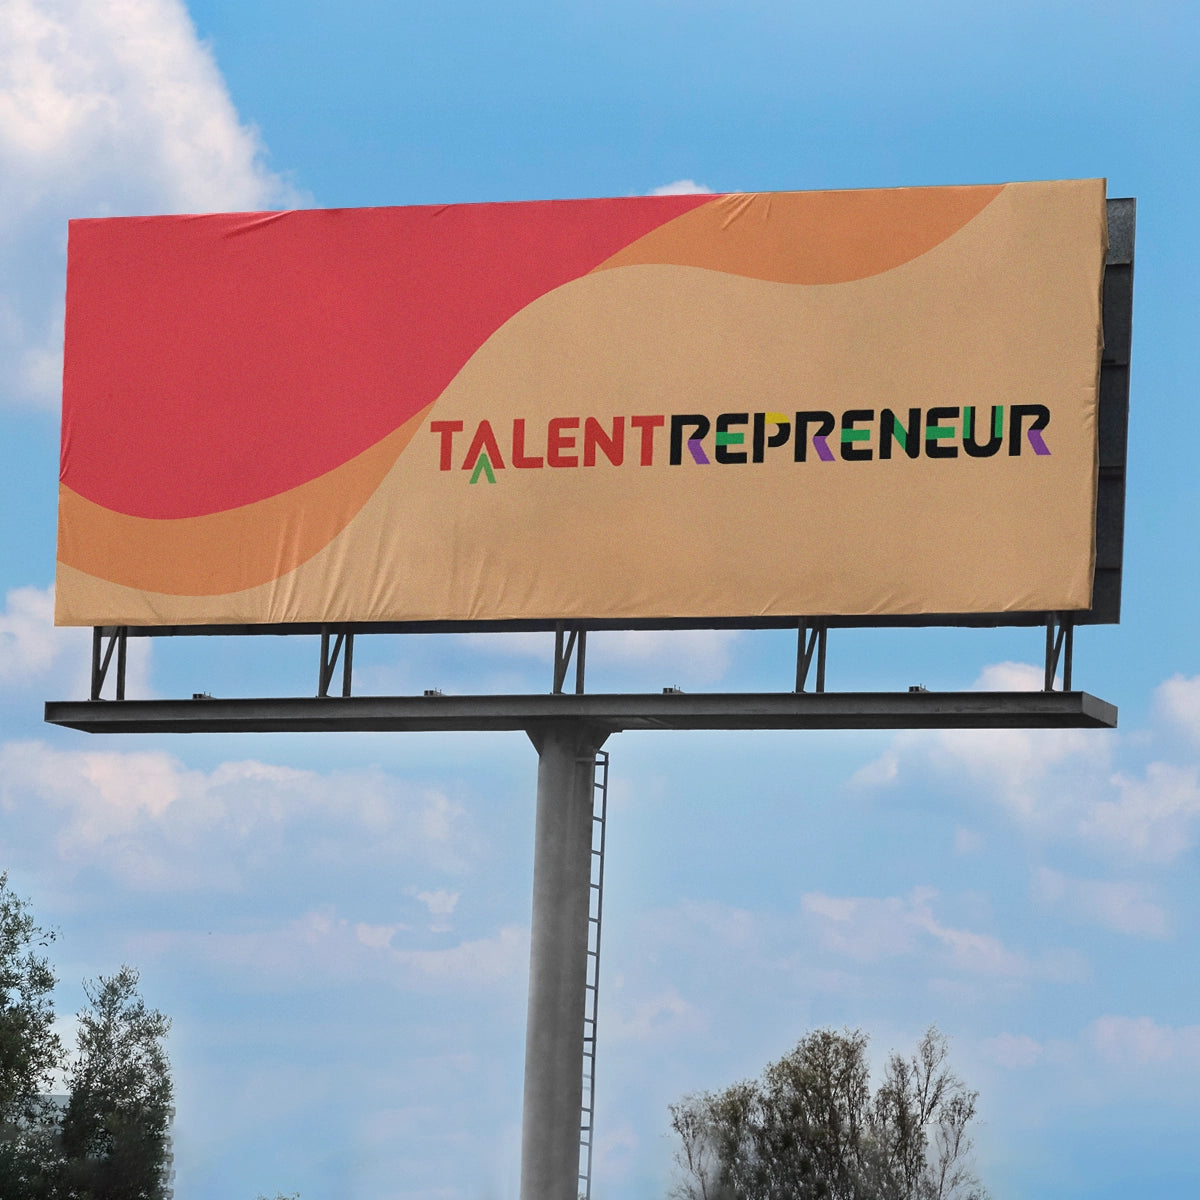 talentrepreneur.com